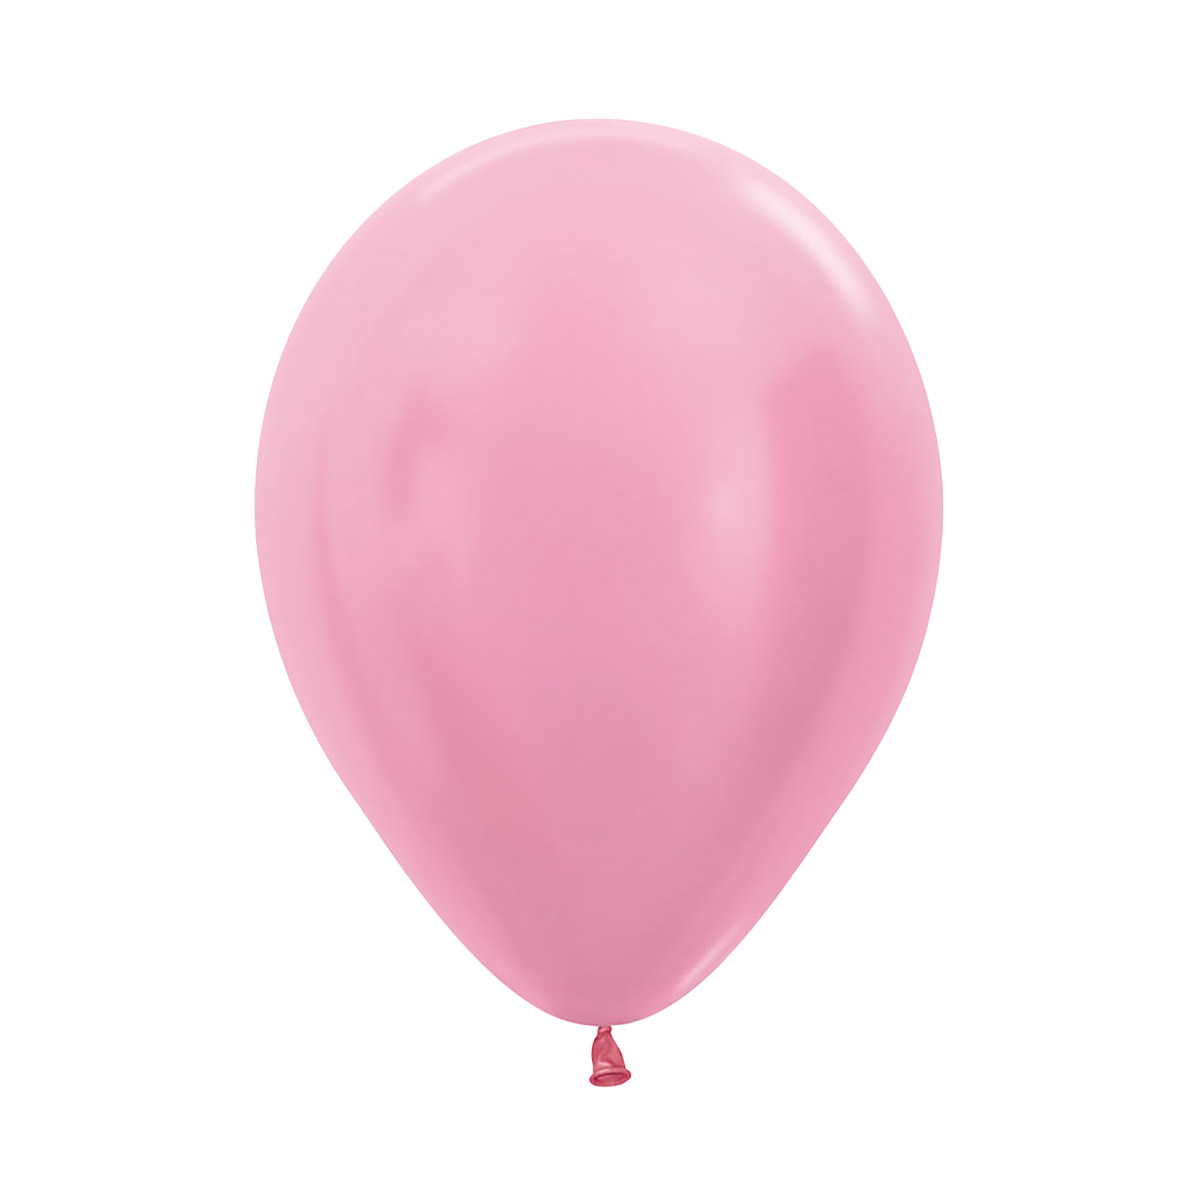 Ballong lösvikt, satin rosa